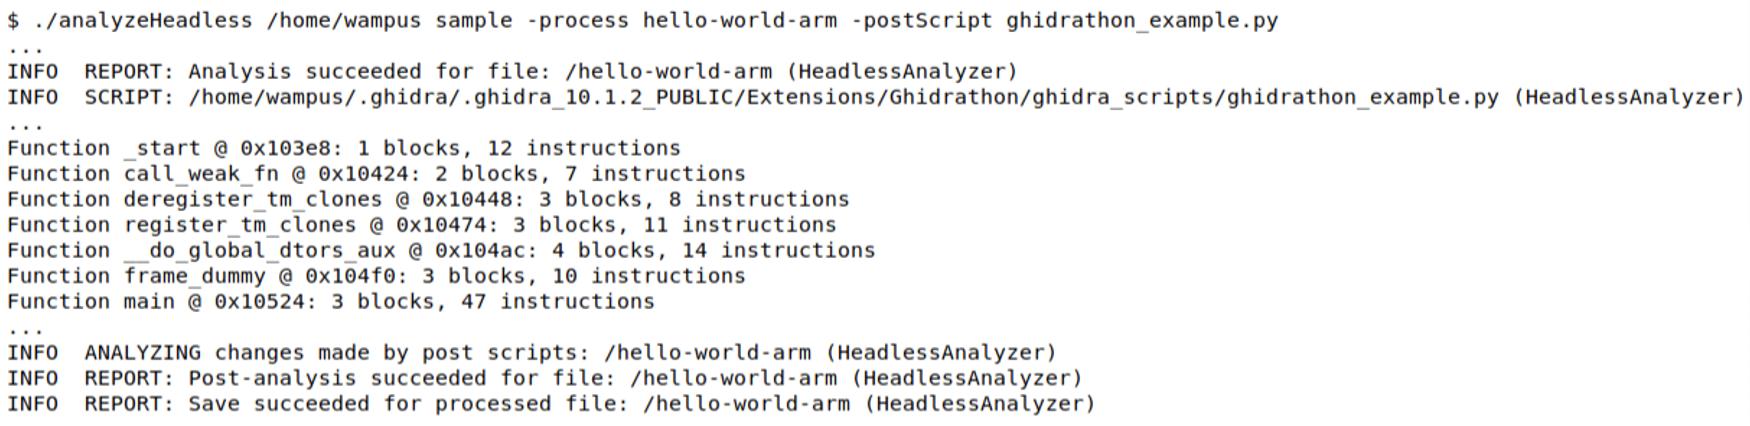 Using Ghidrathon to execute Python 3 scripts in headless mode